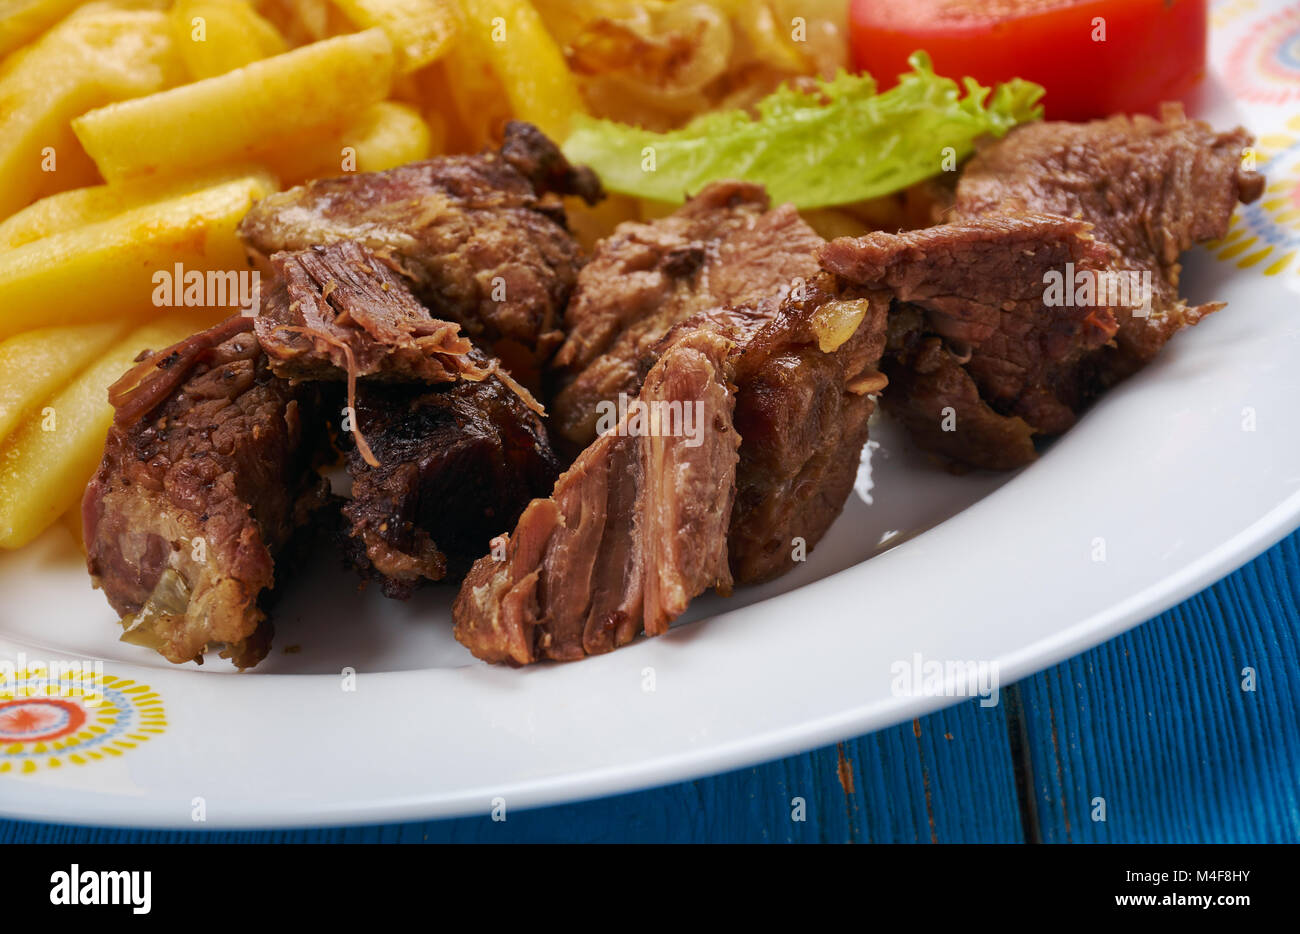 Turkish kebabi tarifi , lamb dish with vegetables Stock Photo